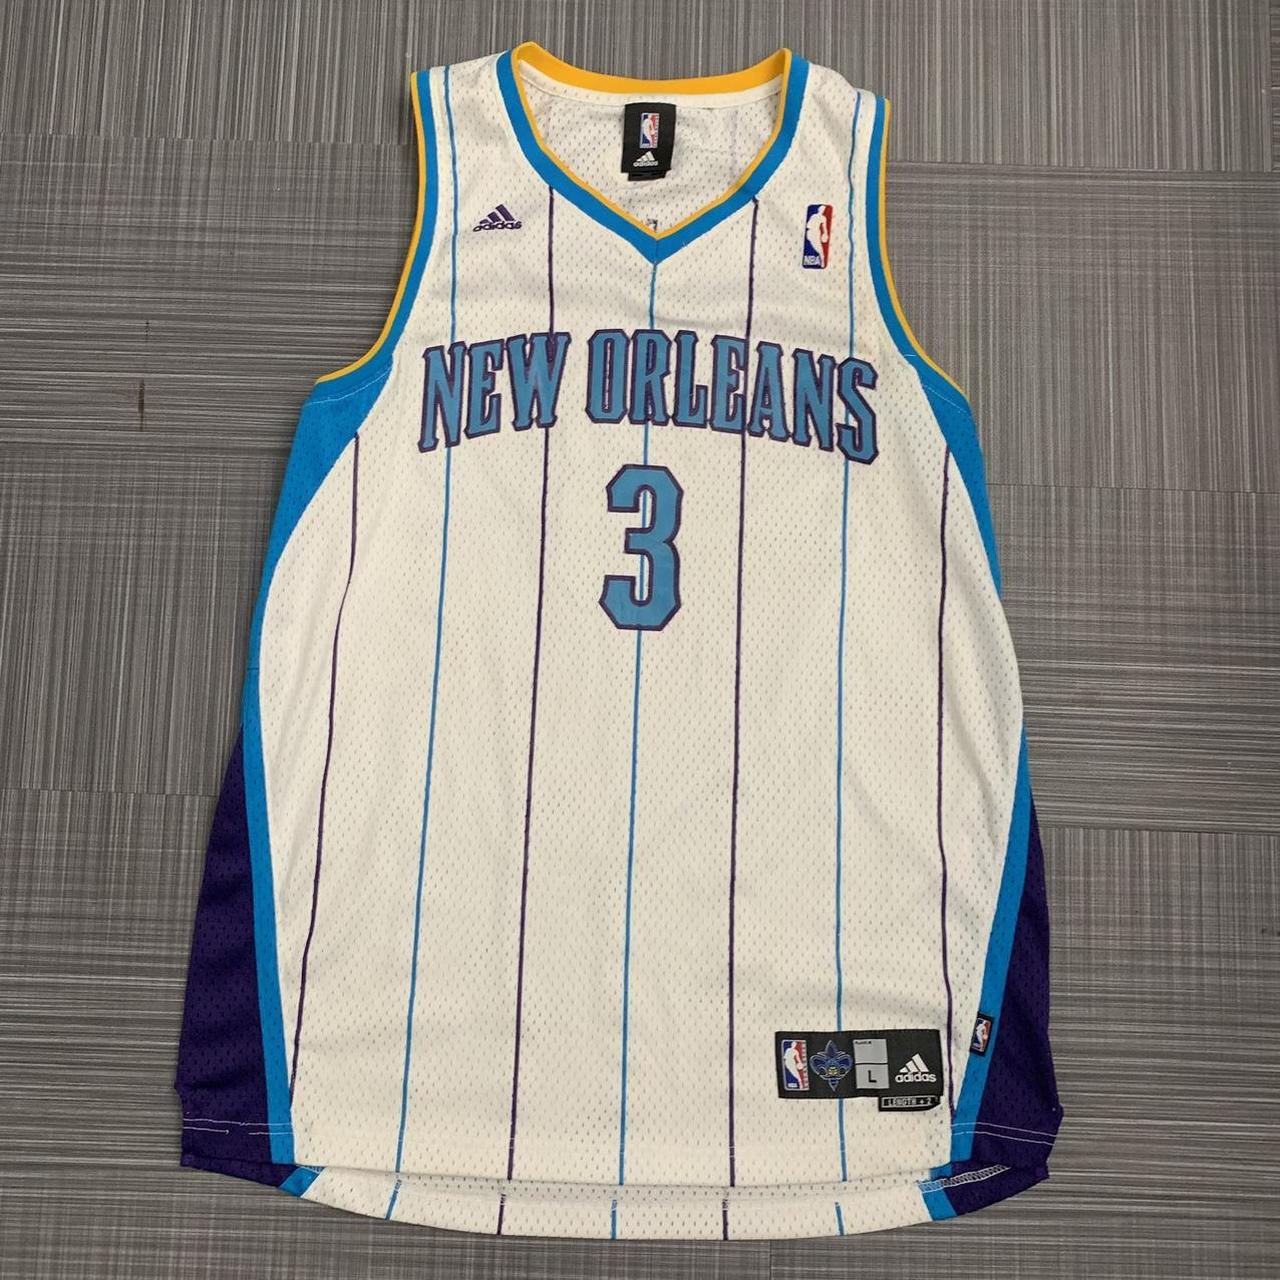 Adidas NBA New Orleans Hornets Chris Paul Basketball Jersey Size